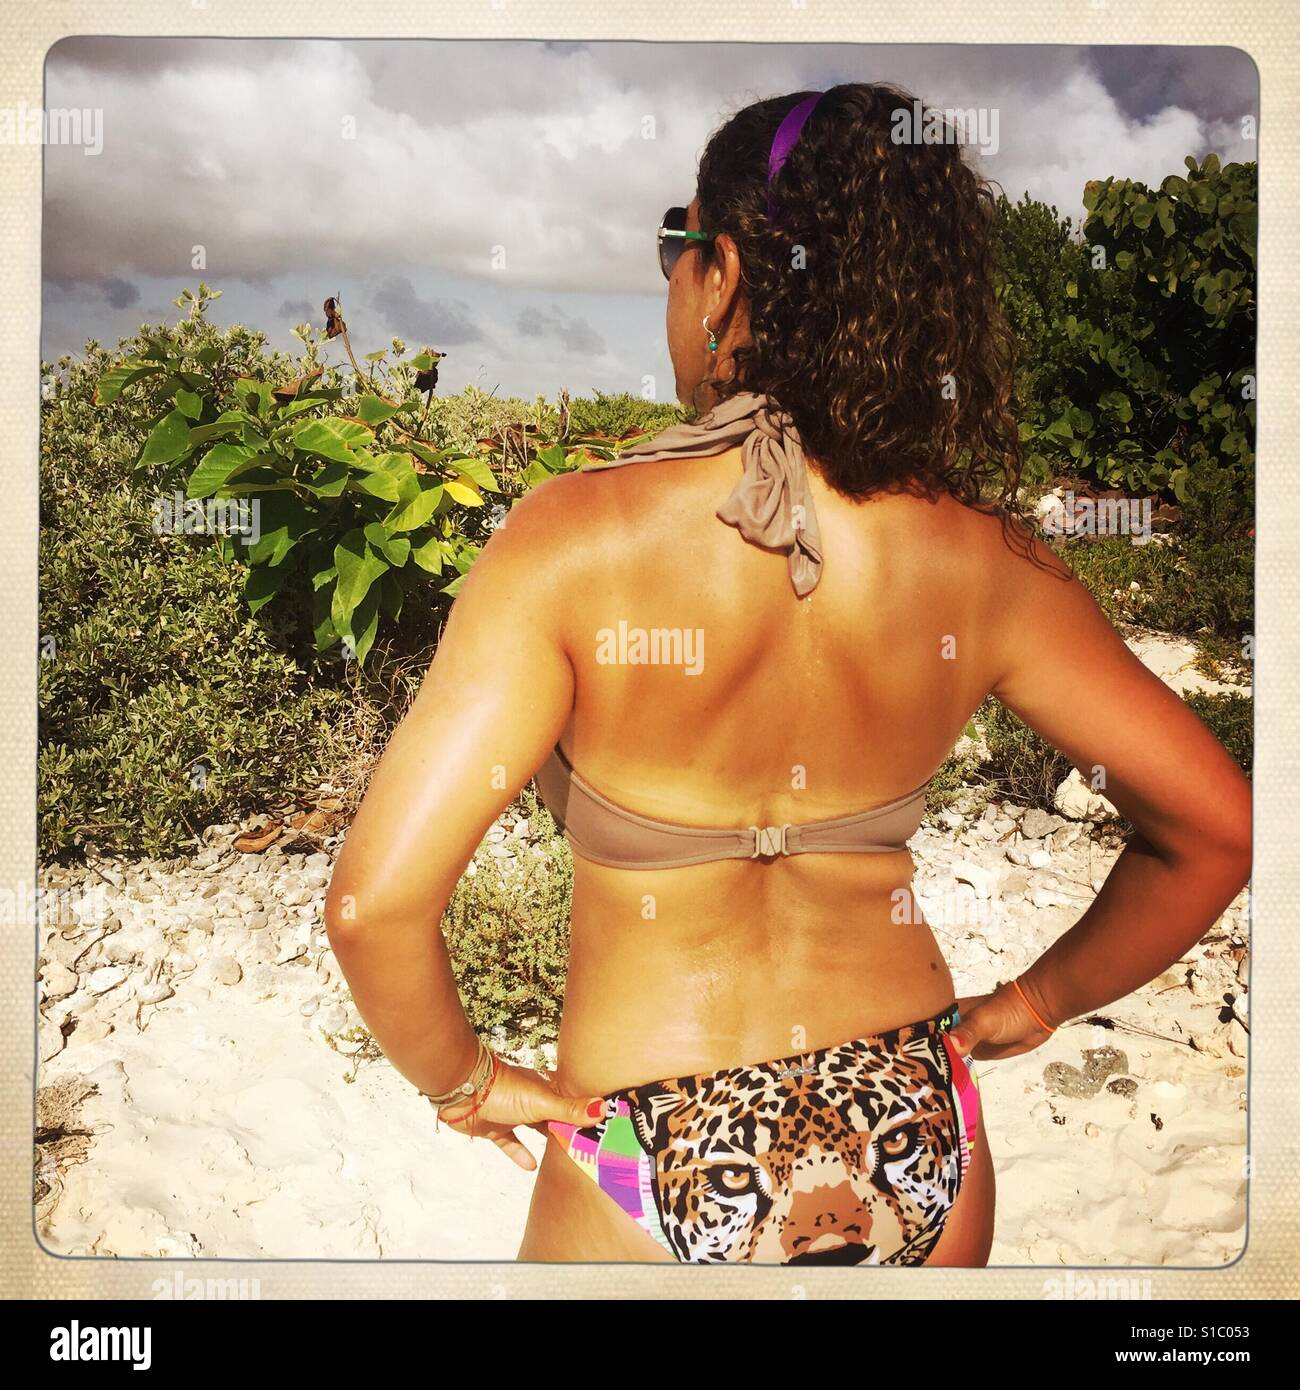 Grauer bikini -Fotos und -Bildmaterial in hoher Auflösung – Alamy